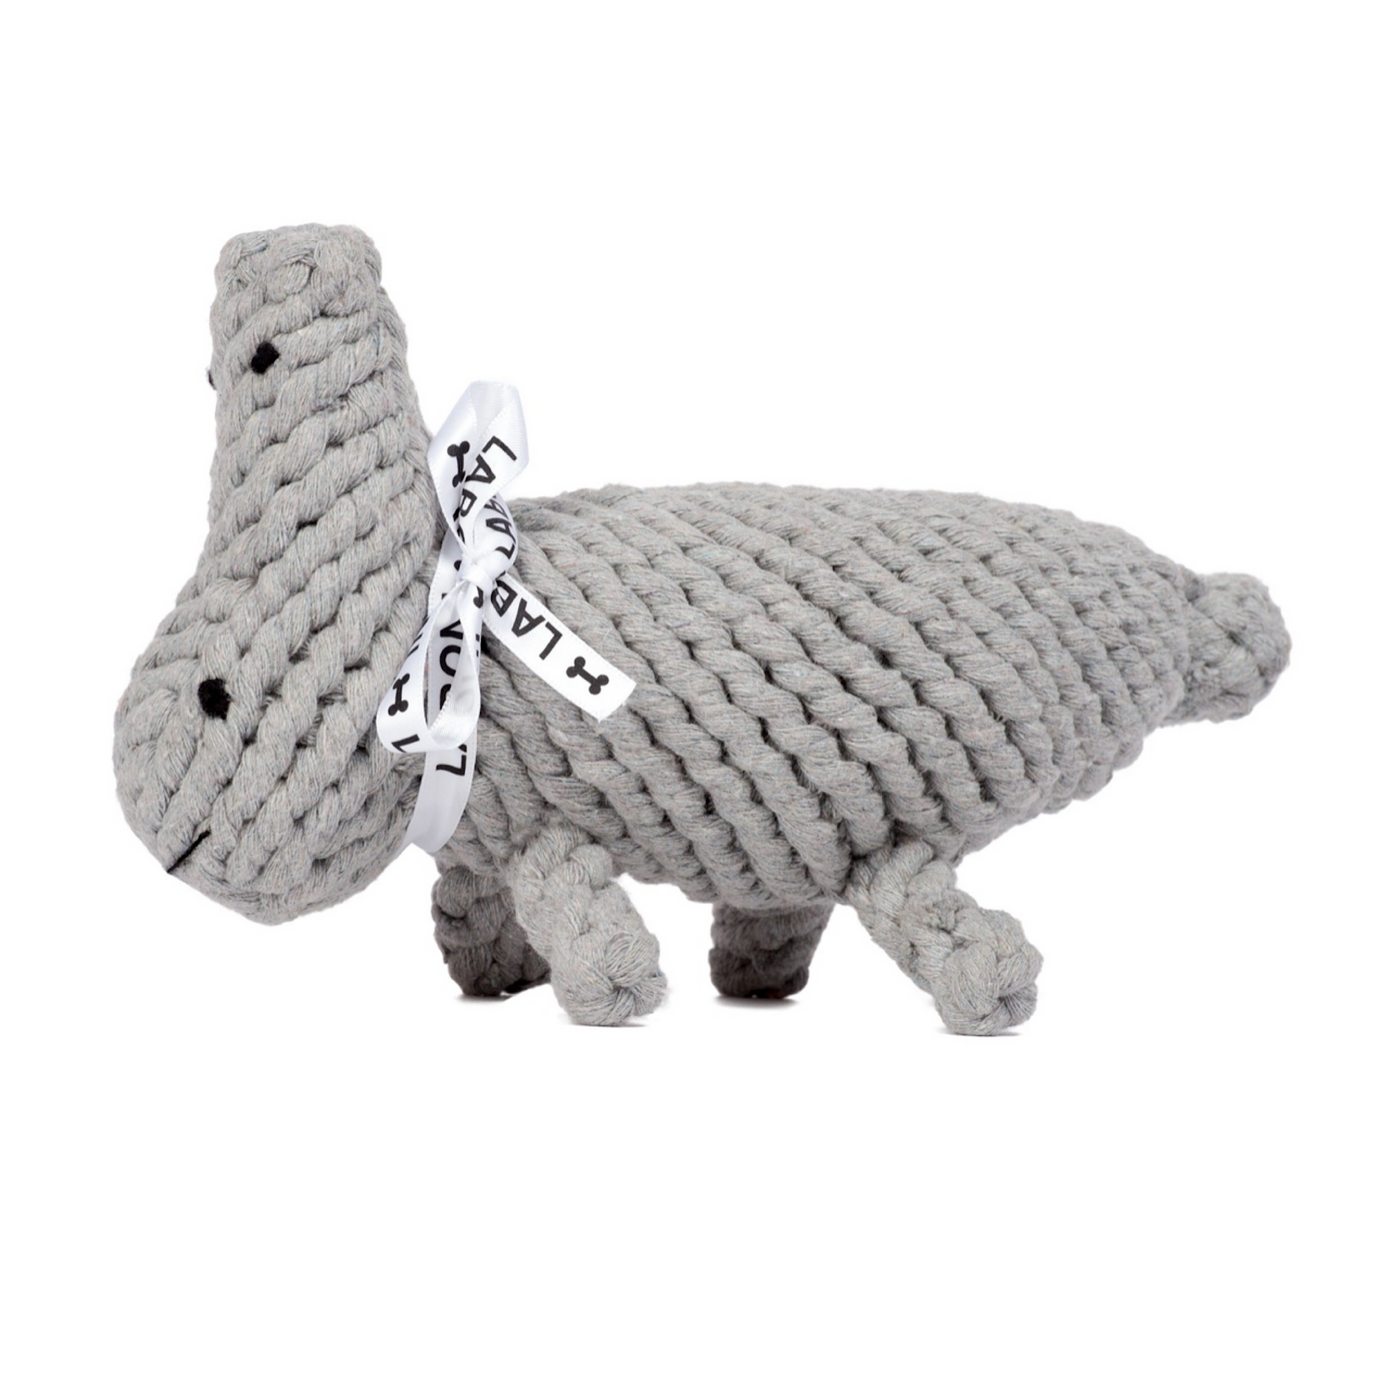 Nina hippopotamus - cult toy for dogs